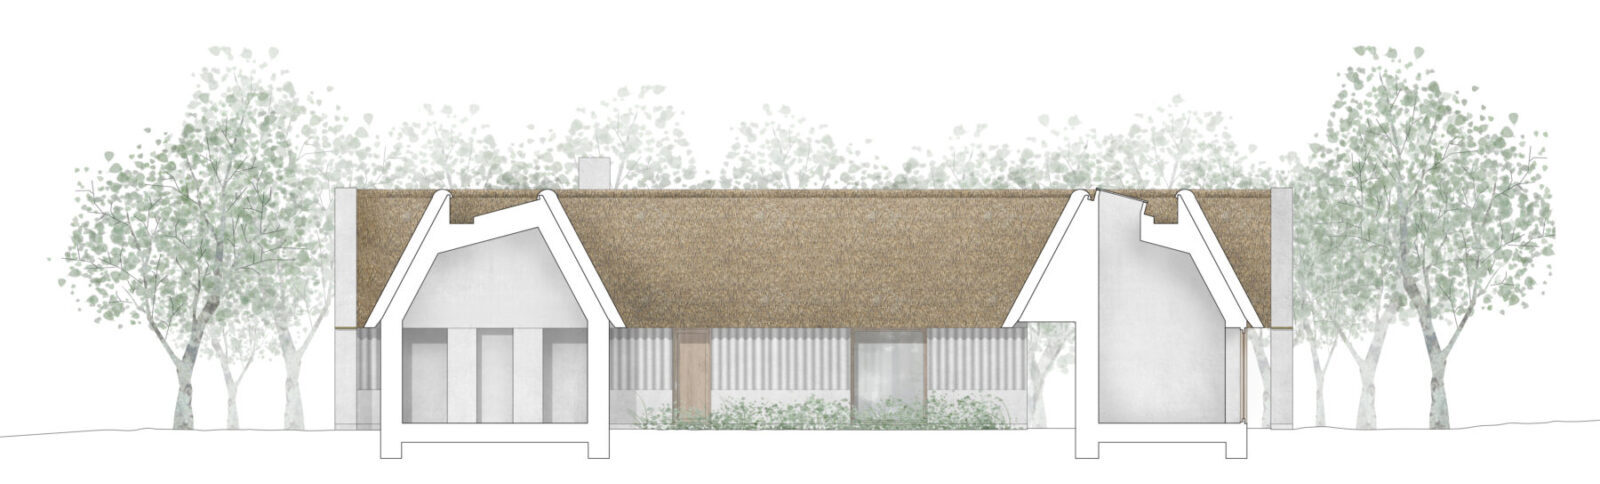 Archisearch Aastrup Garden farm house | by NORRØN Architects